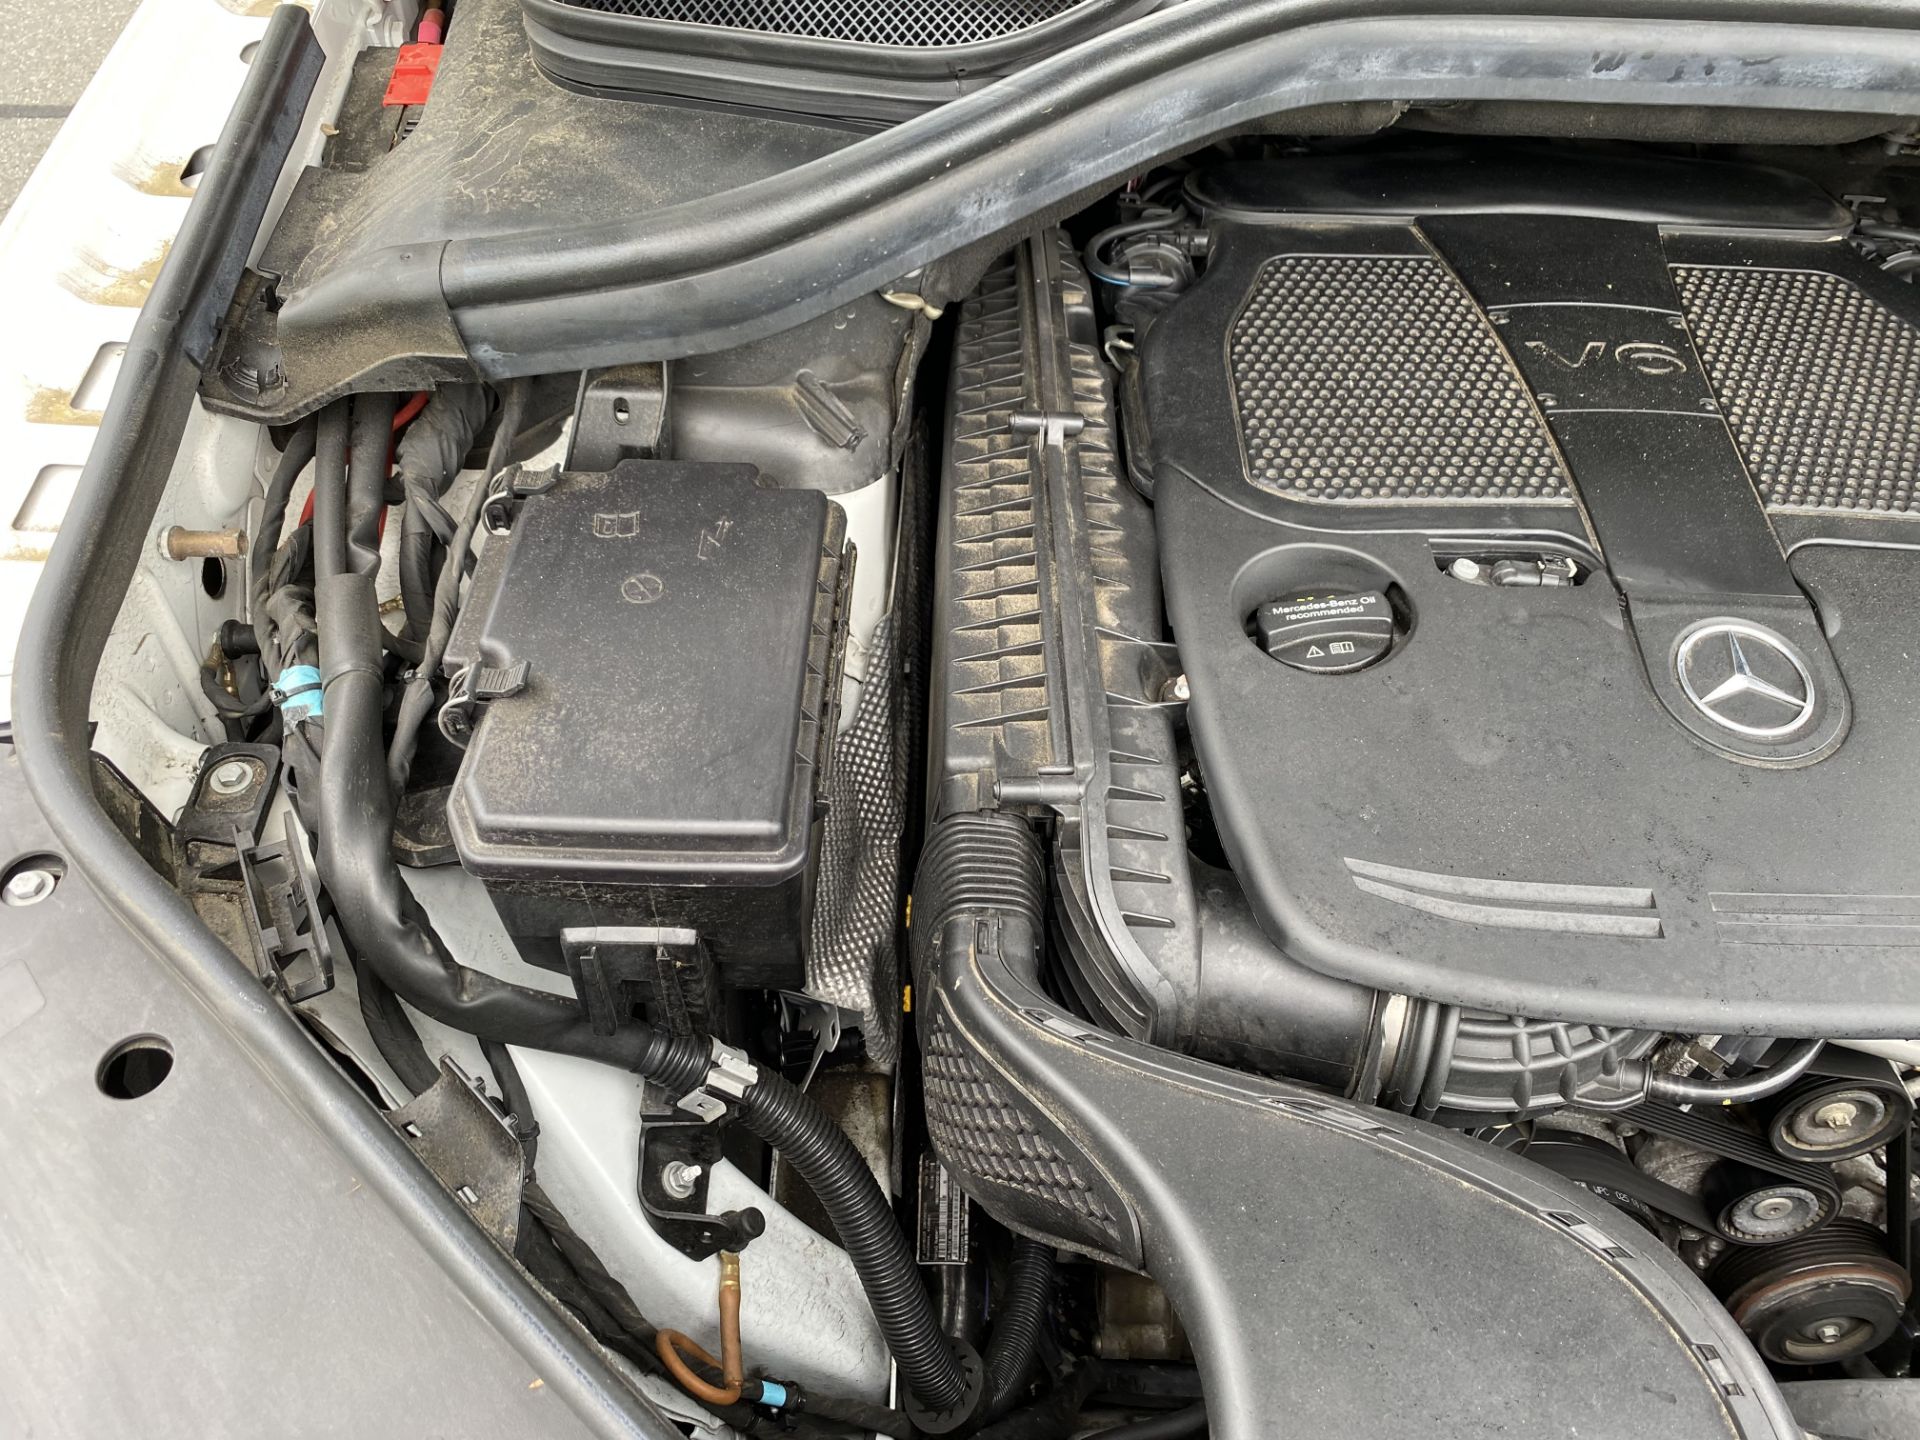 2018 Mercedes Benz GLE350, Odom: 52,420, VIN#: 4JGDA5HBXJB144786, Leather Interior, Power - Image 19 of 19